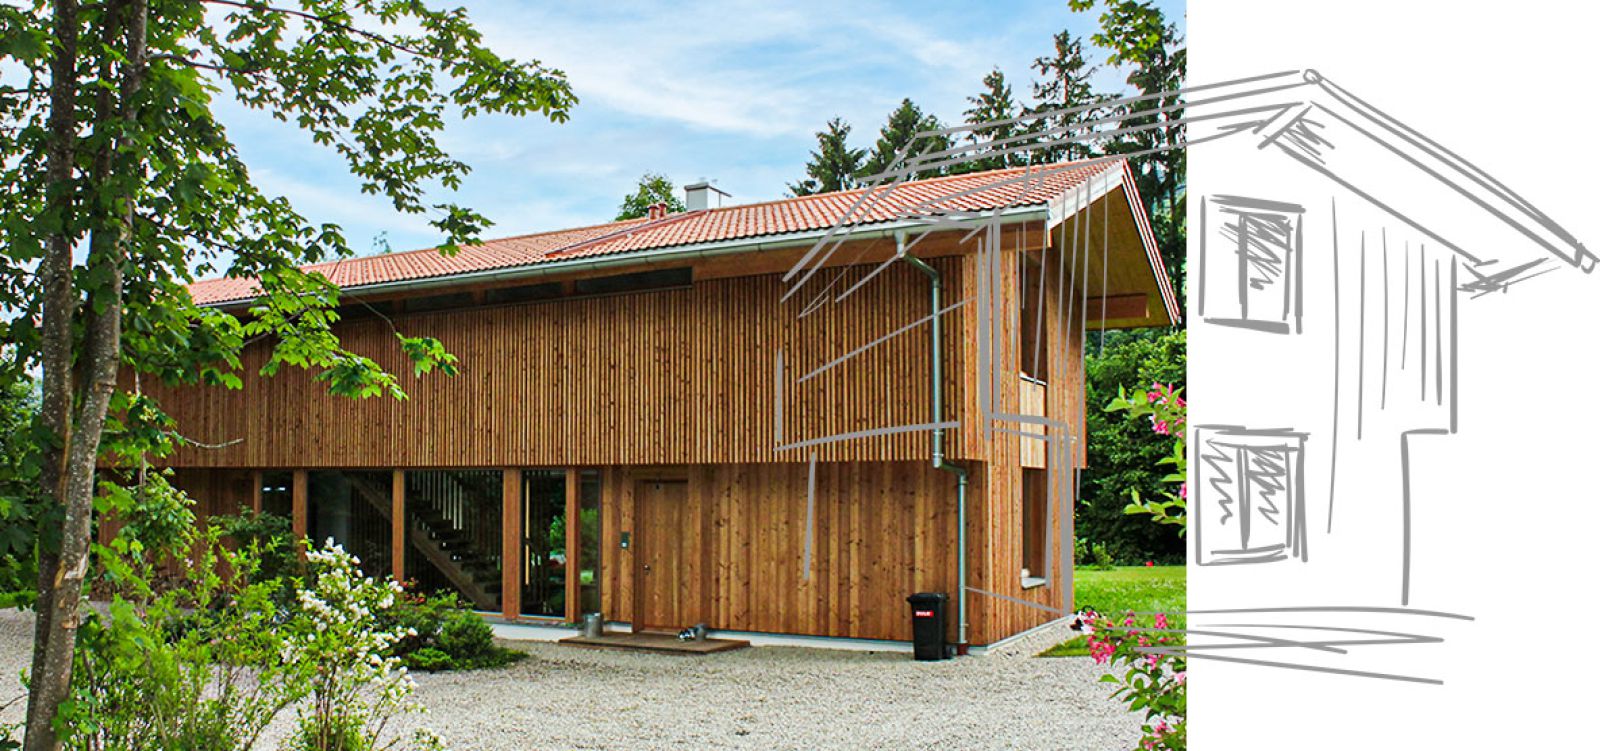 Individuell geplantes, gesundes Holzhaus in Massivbauweise